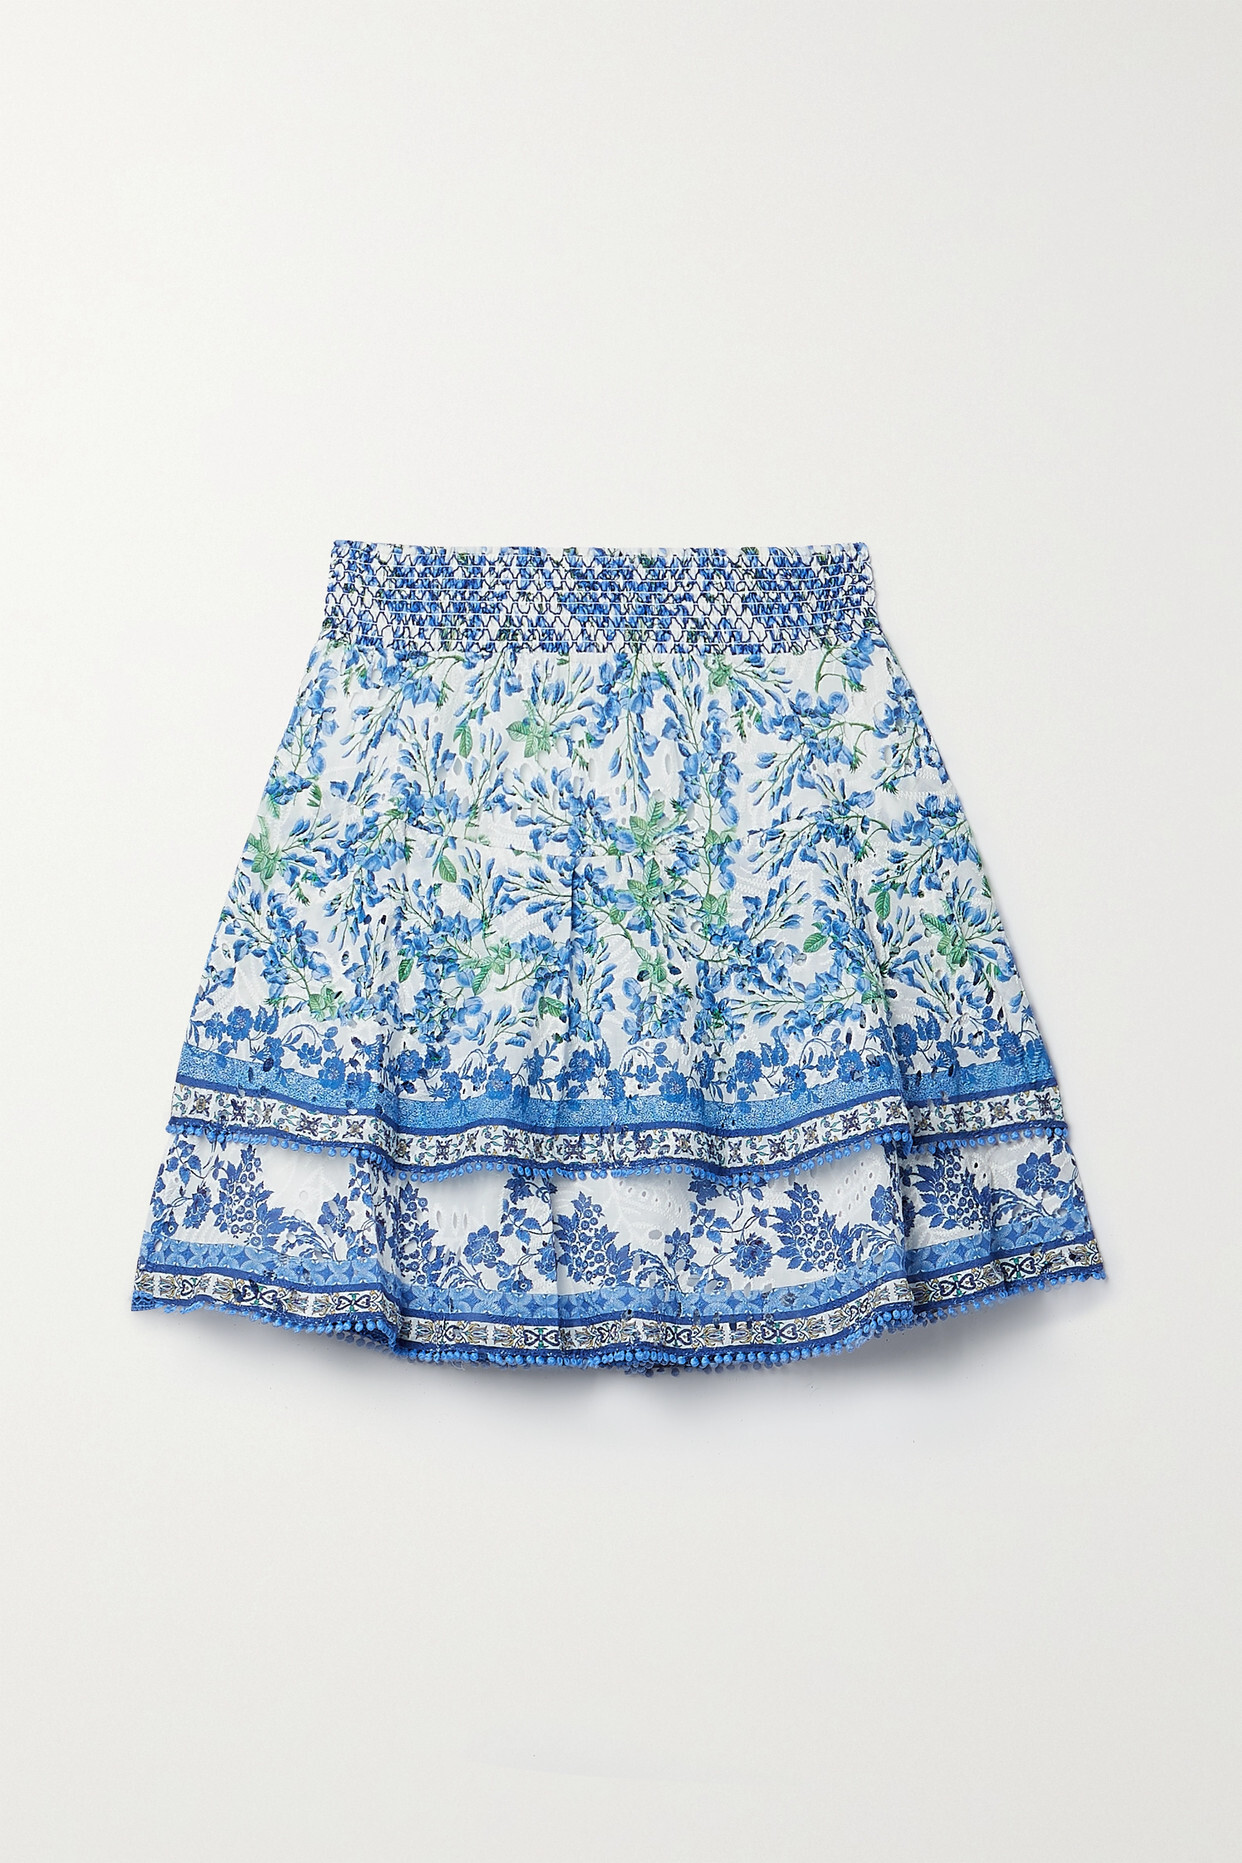 Alice + Olivia Alice + Olivia - Crawford Smocked Printed Broderie Anglaise Cotton Mini Skirt - Blue